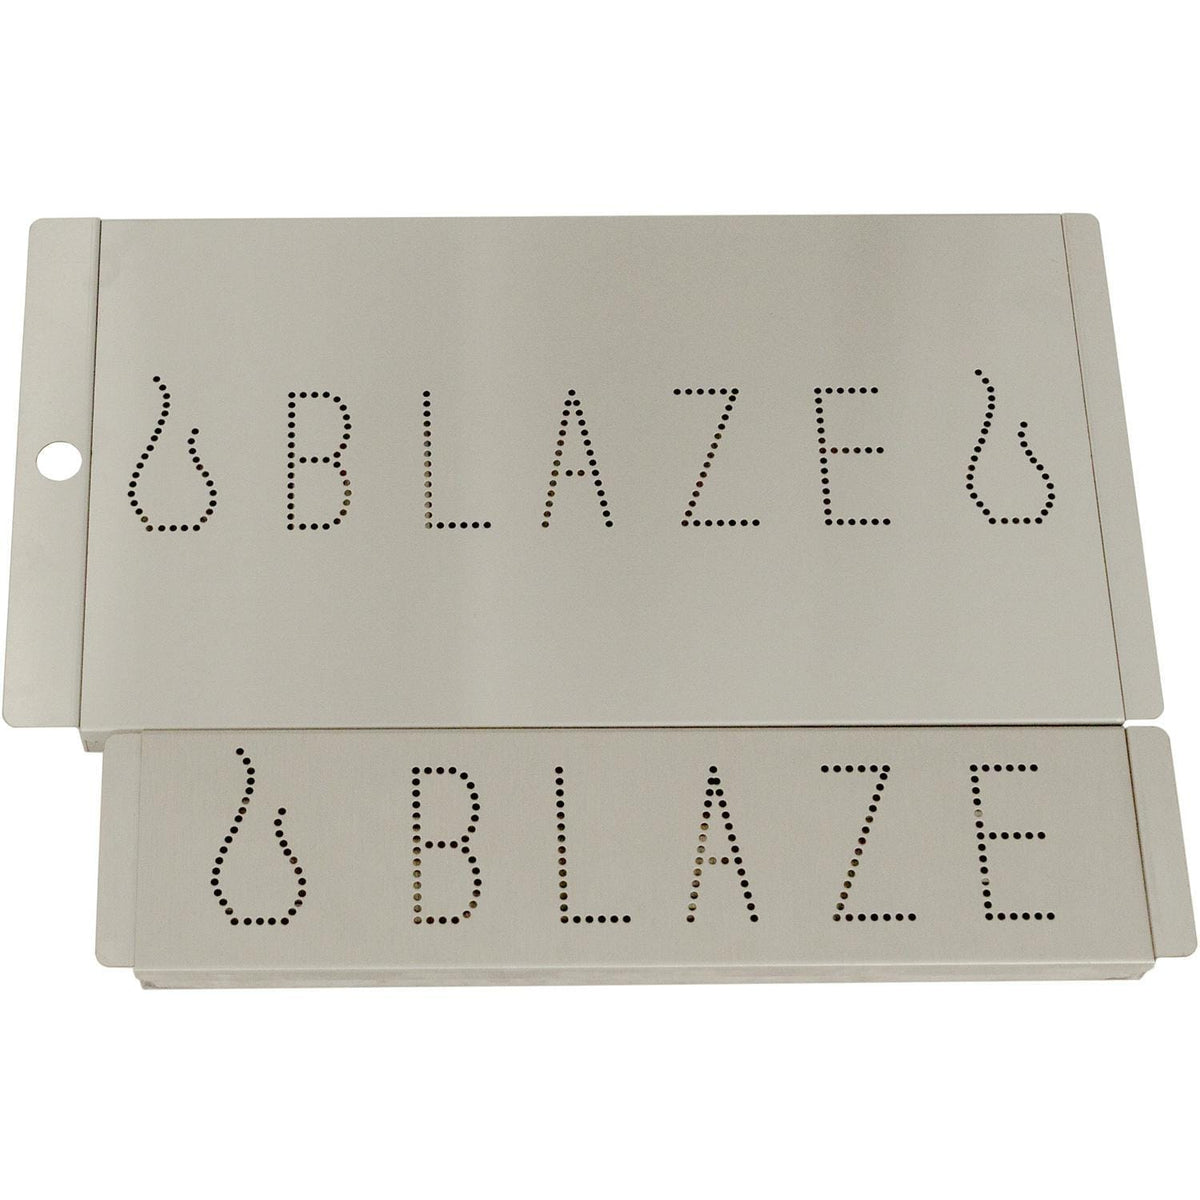 Blaze Professional Extra Large Smoker Box Size Comparison With The Standard Size Blaze Pro Smoker Box